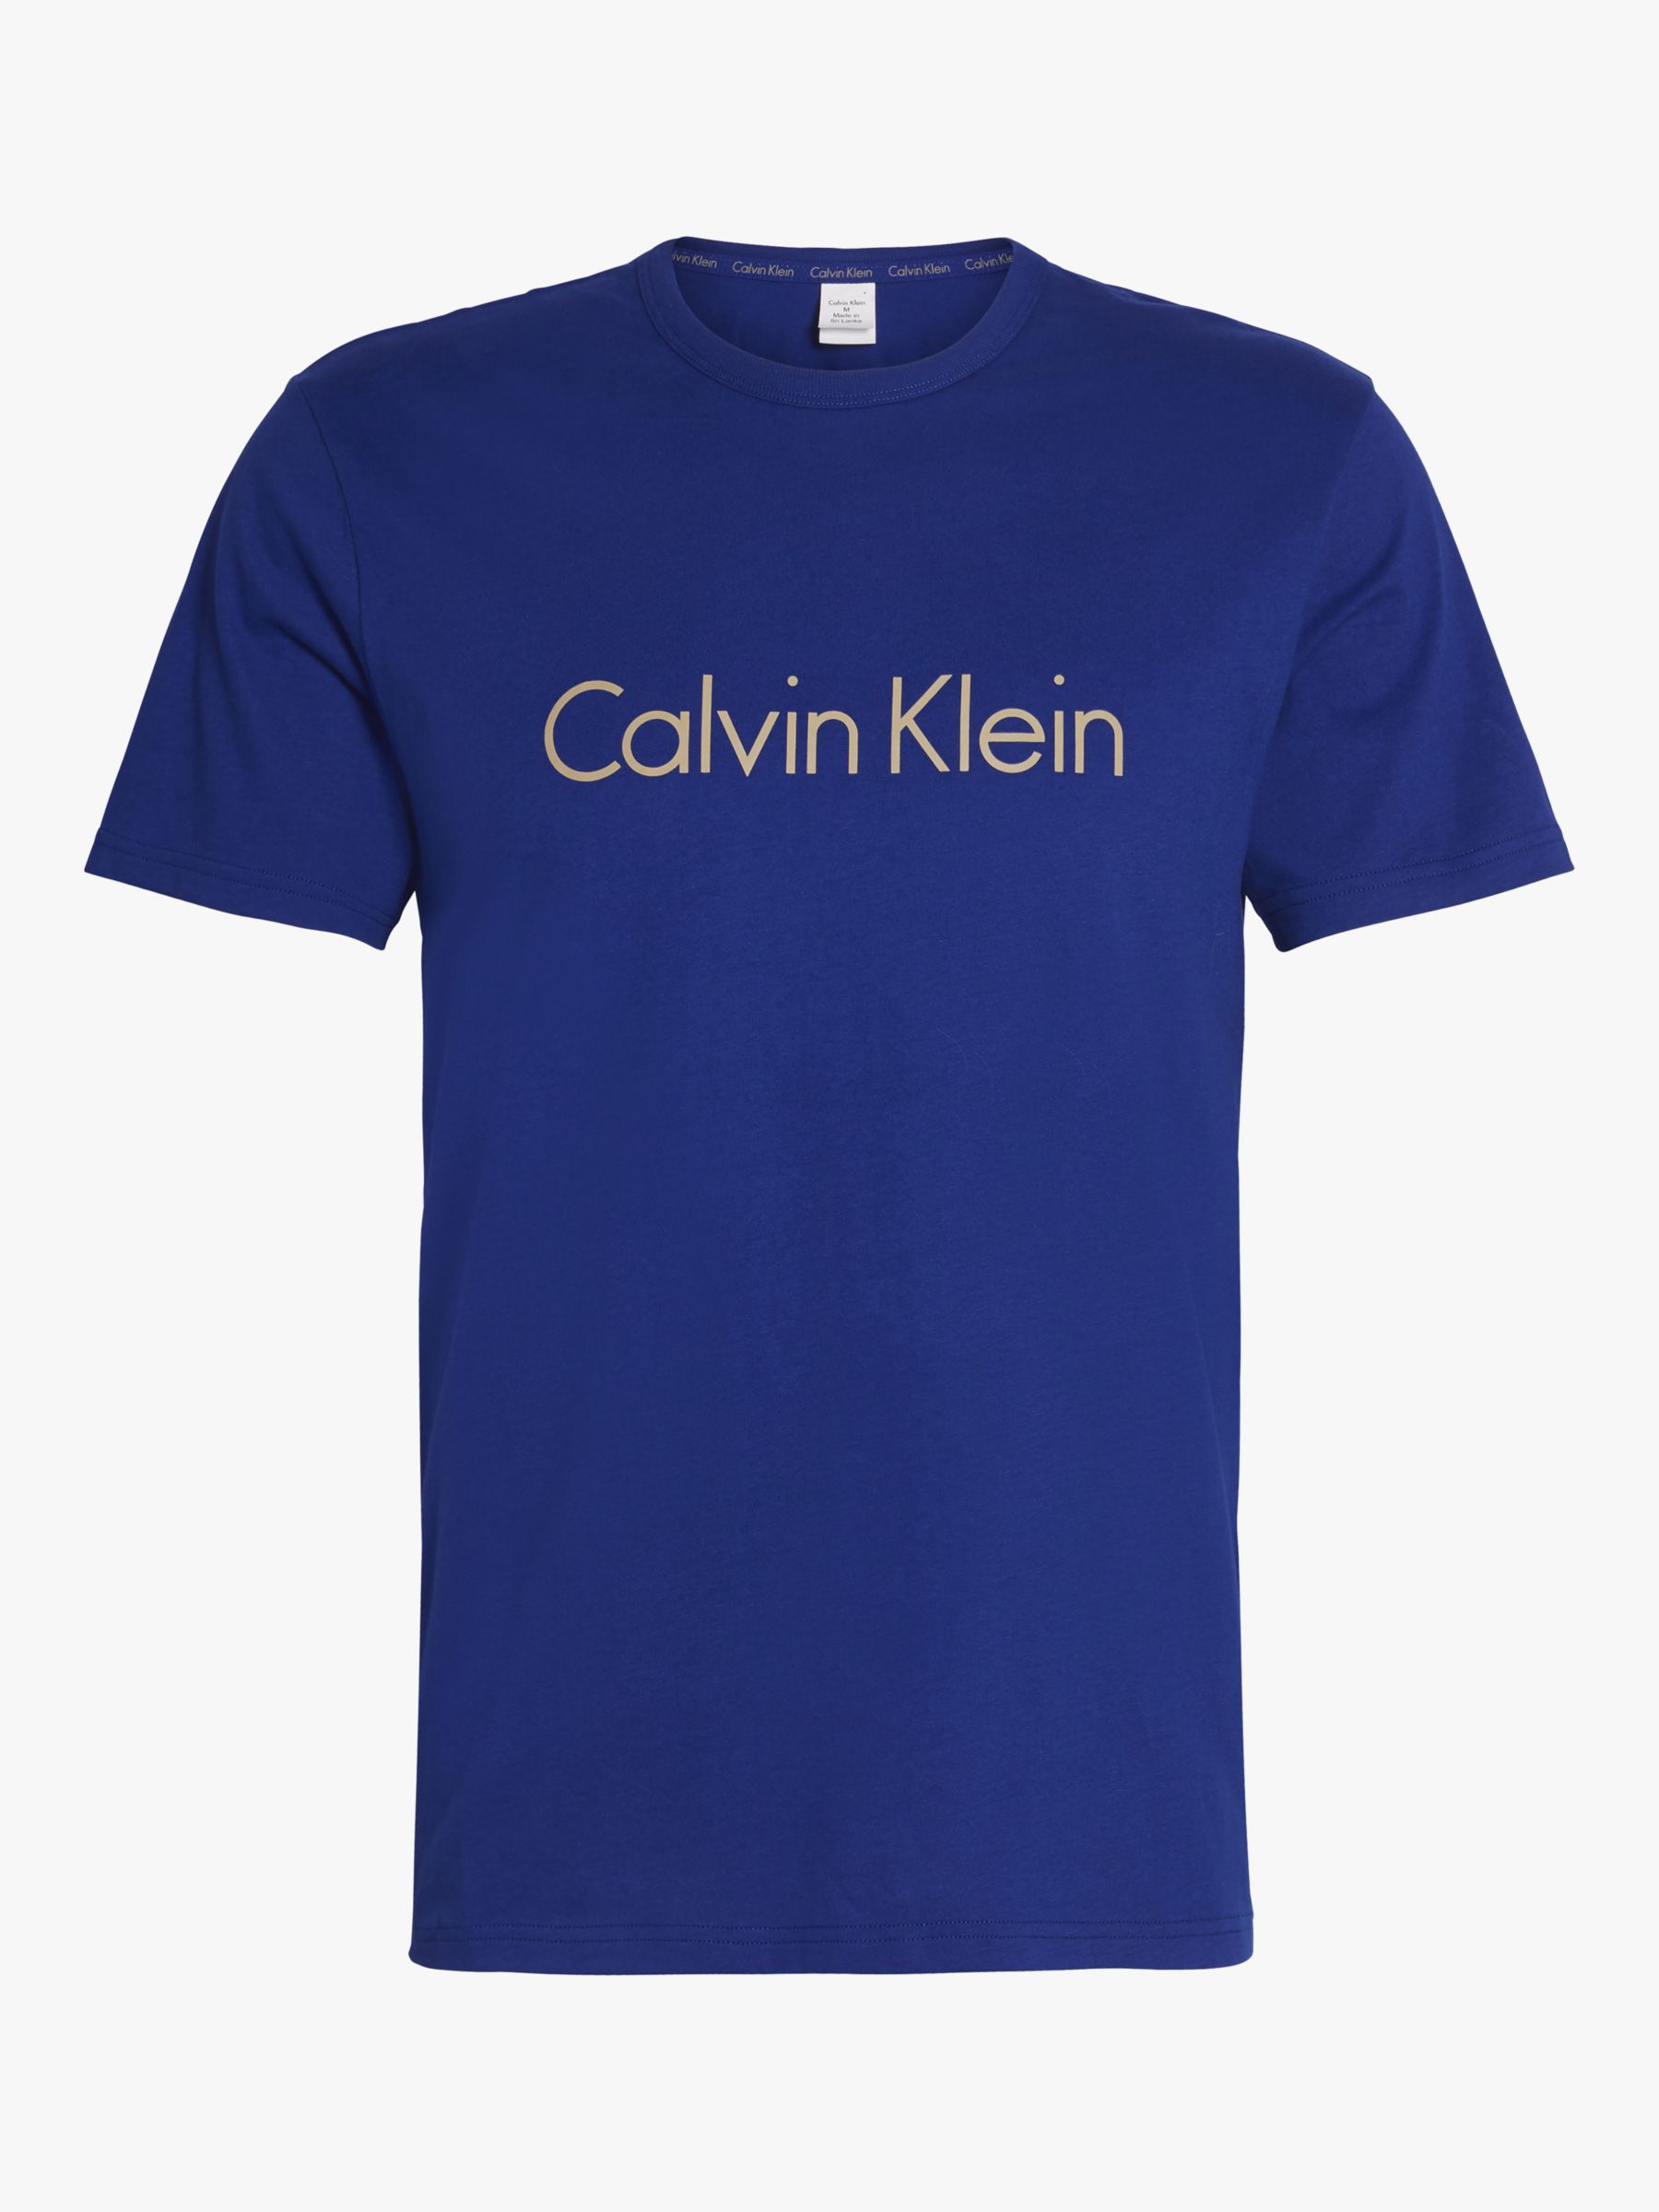 Calvin Klein CK Comfort Lounge T-Shirt, Sharp Blue at John Lewis & Partners